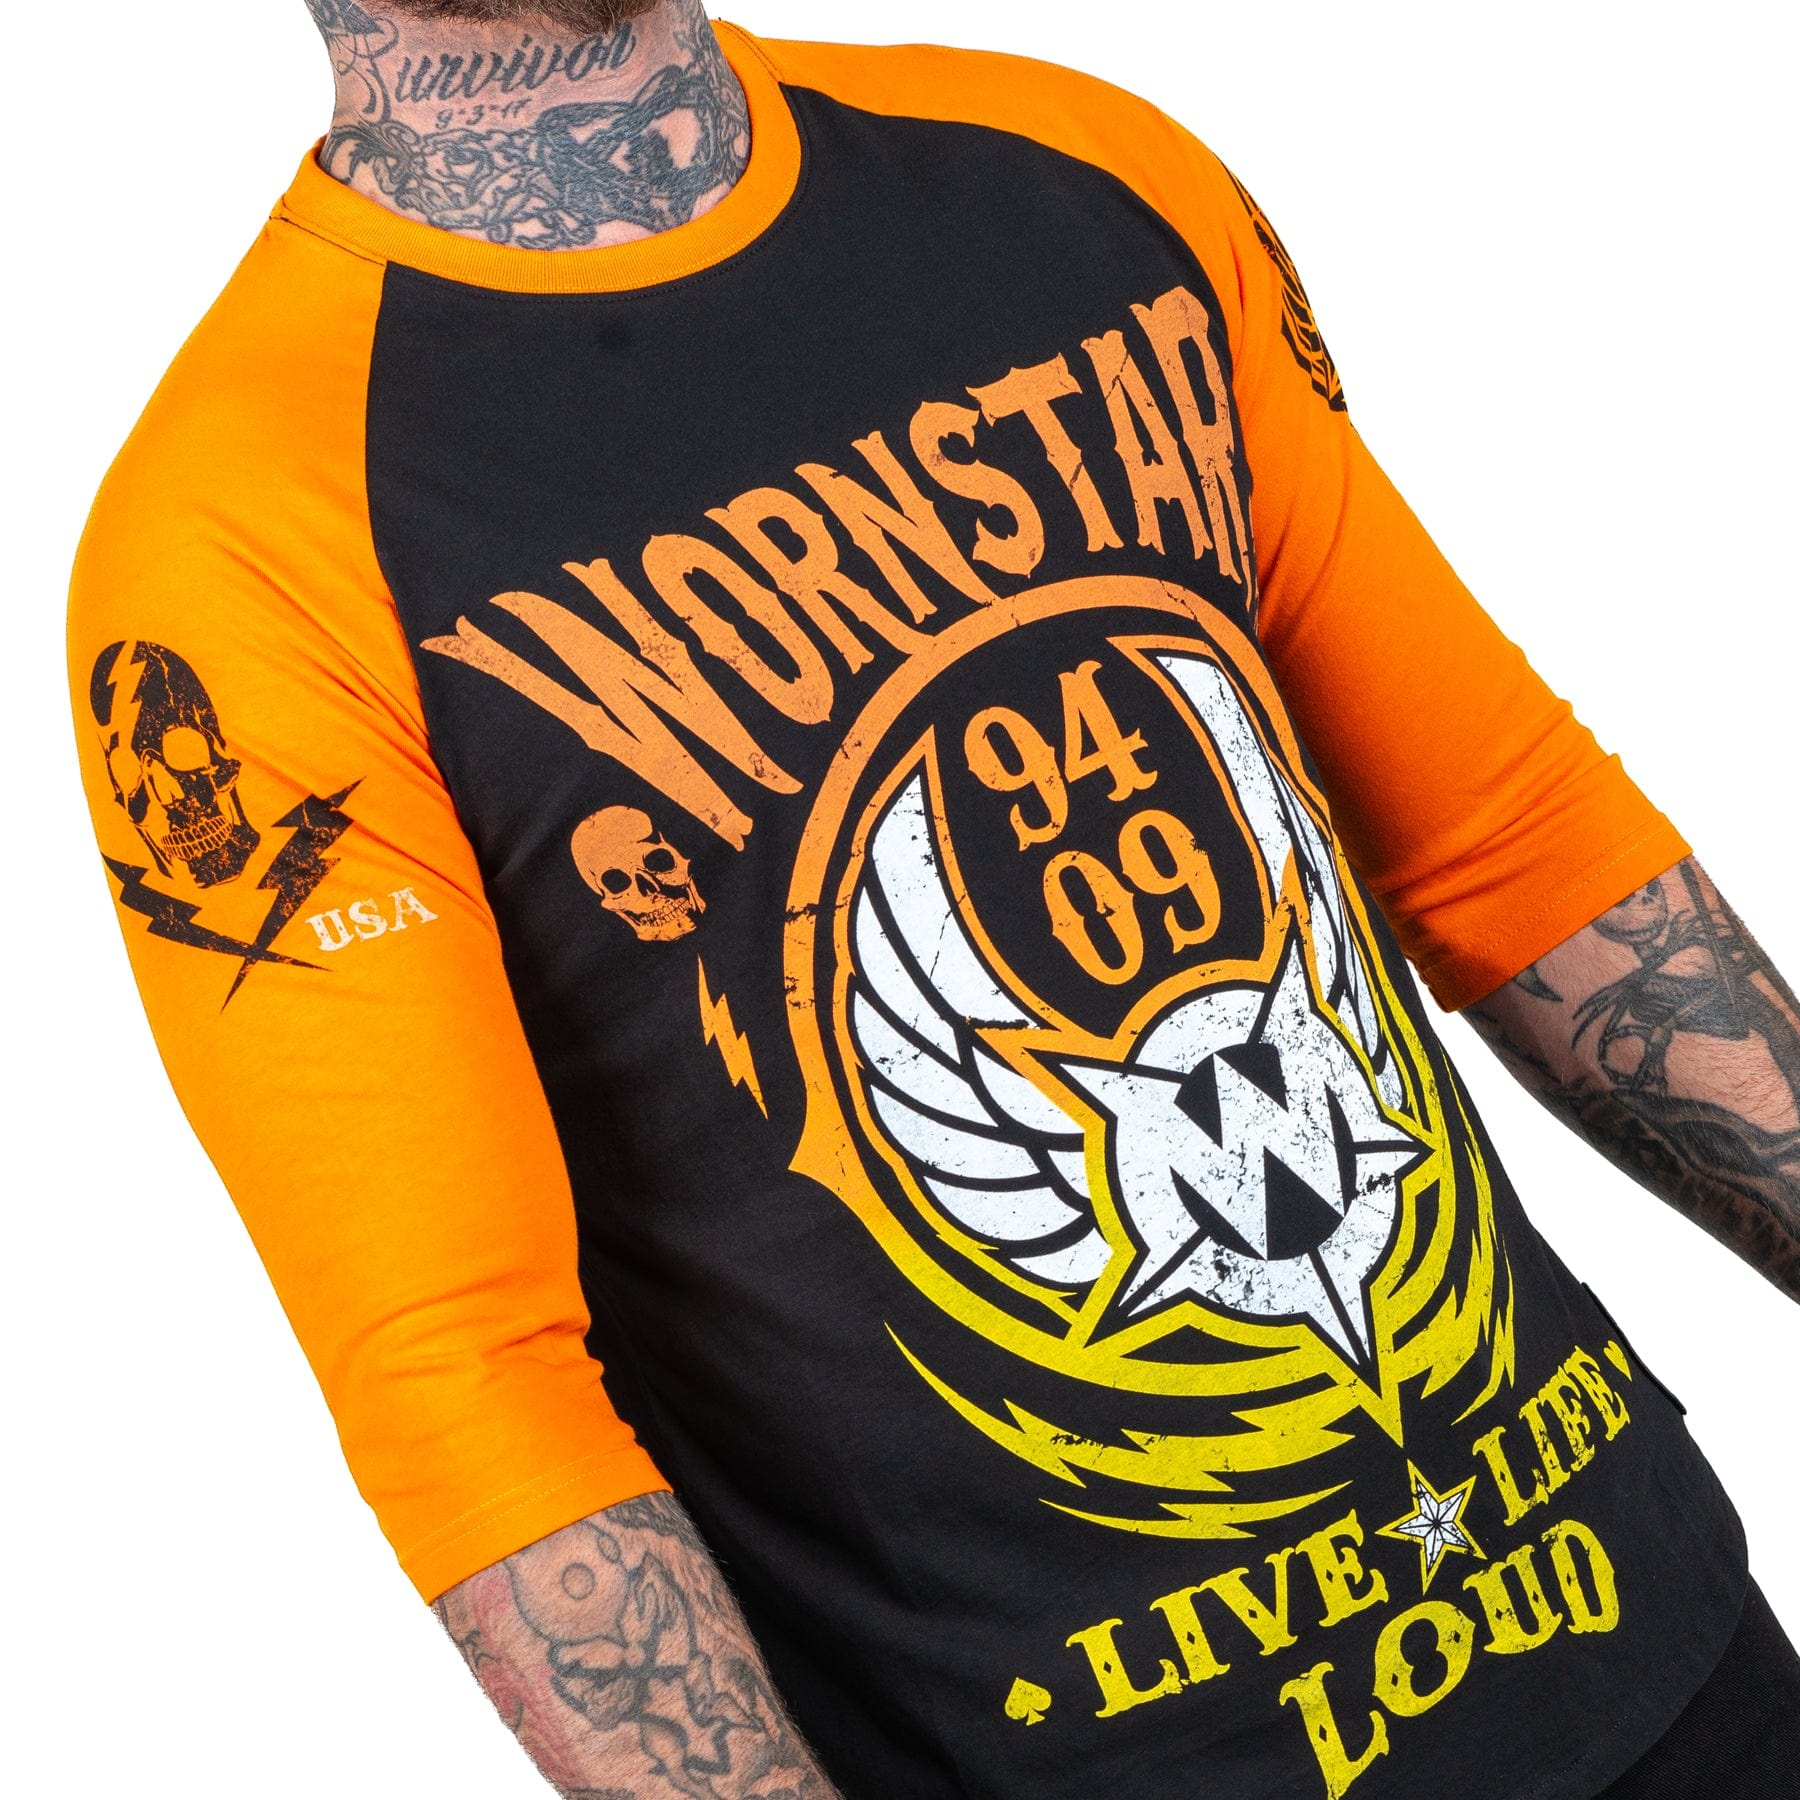 Wornstar Clothing Mens Tee. Live Life Loud Raglan T-Shirt - Orange/Black